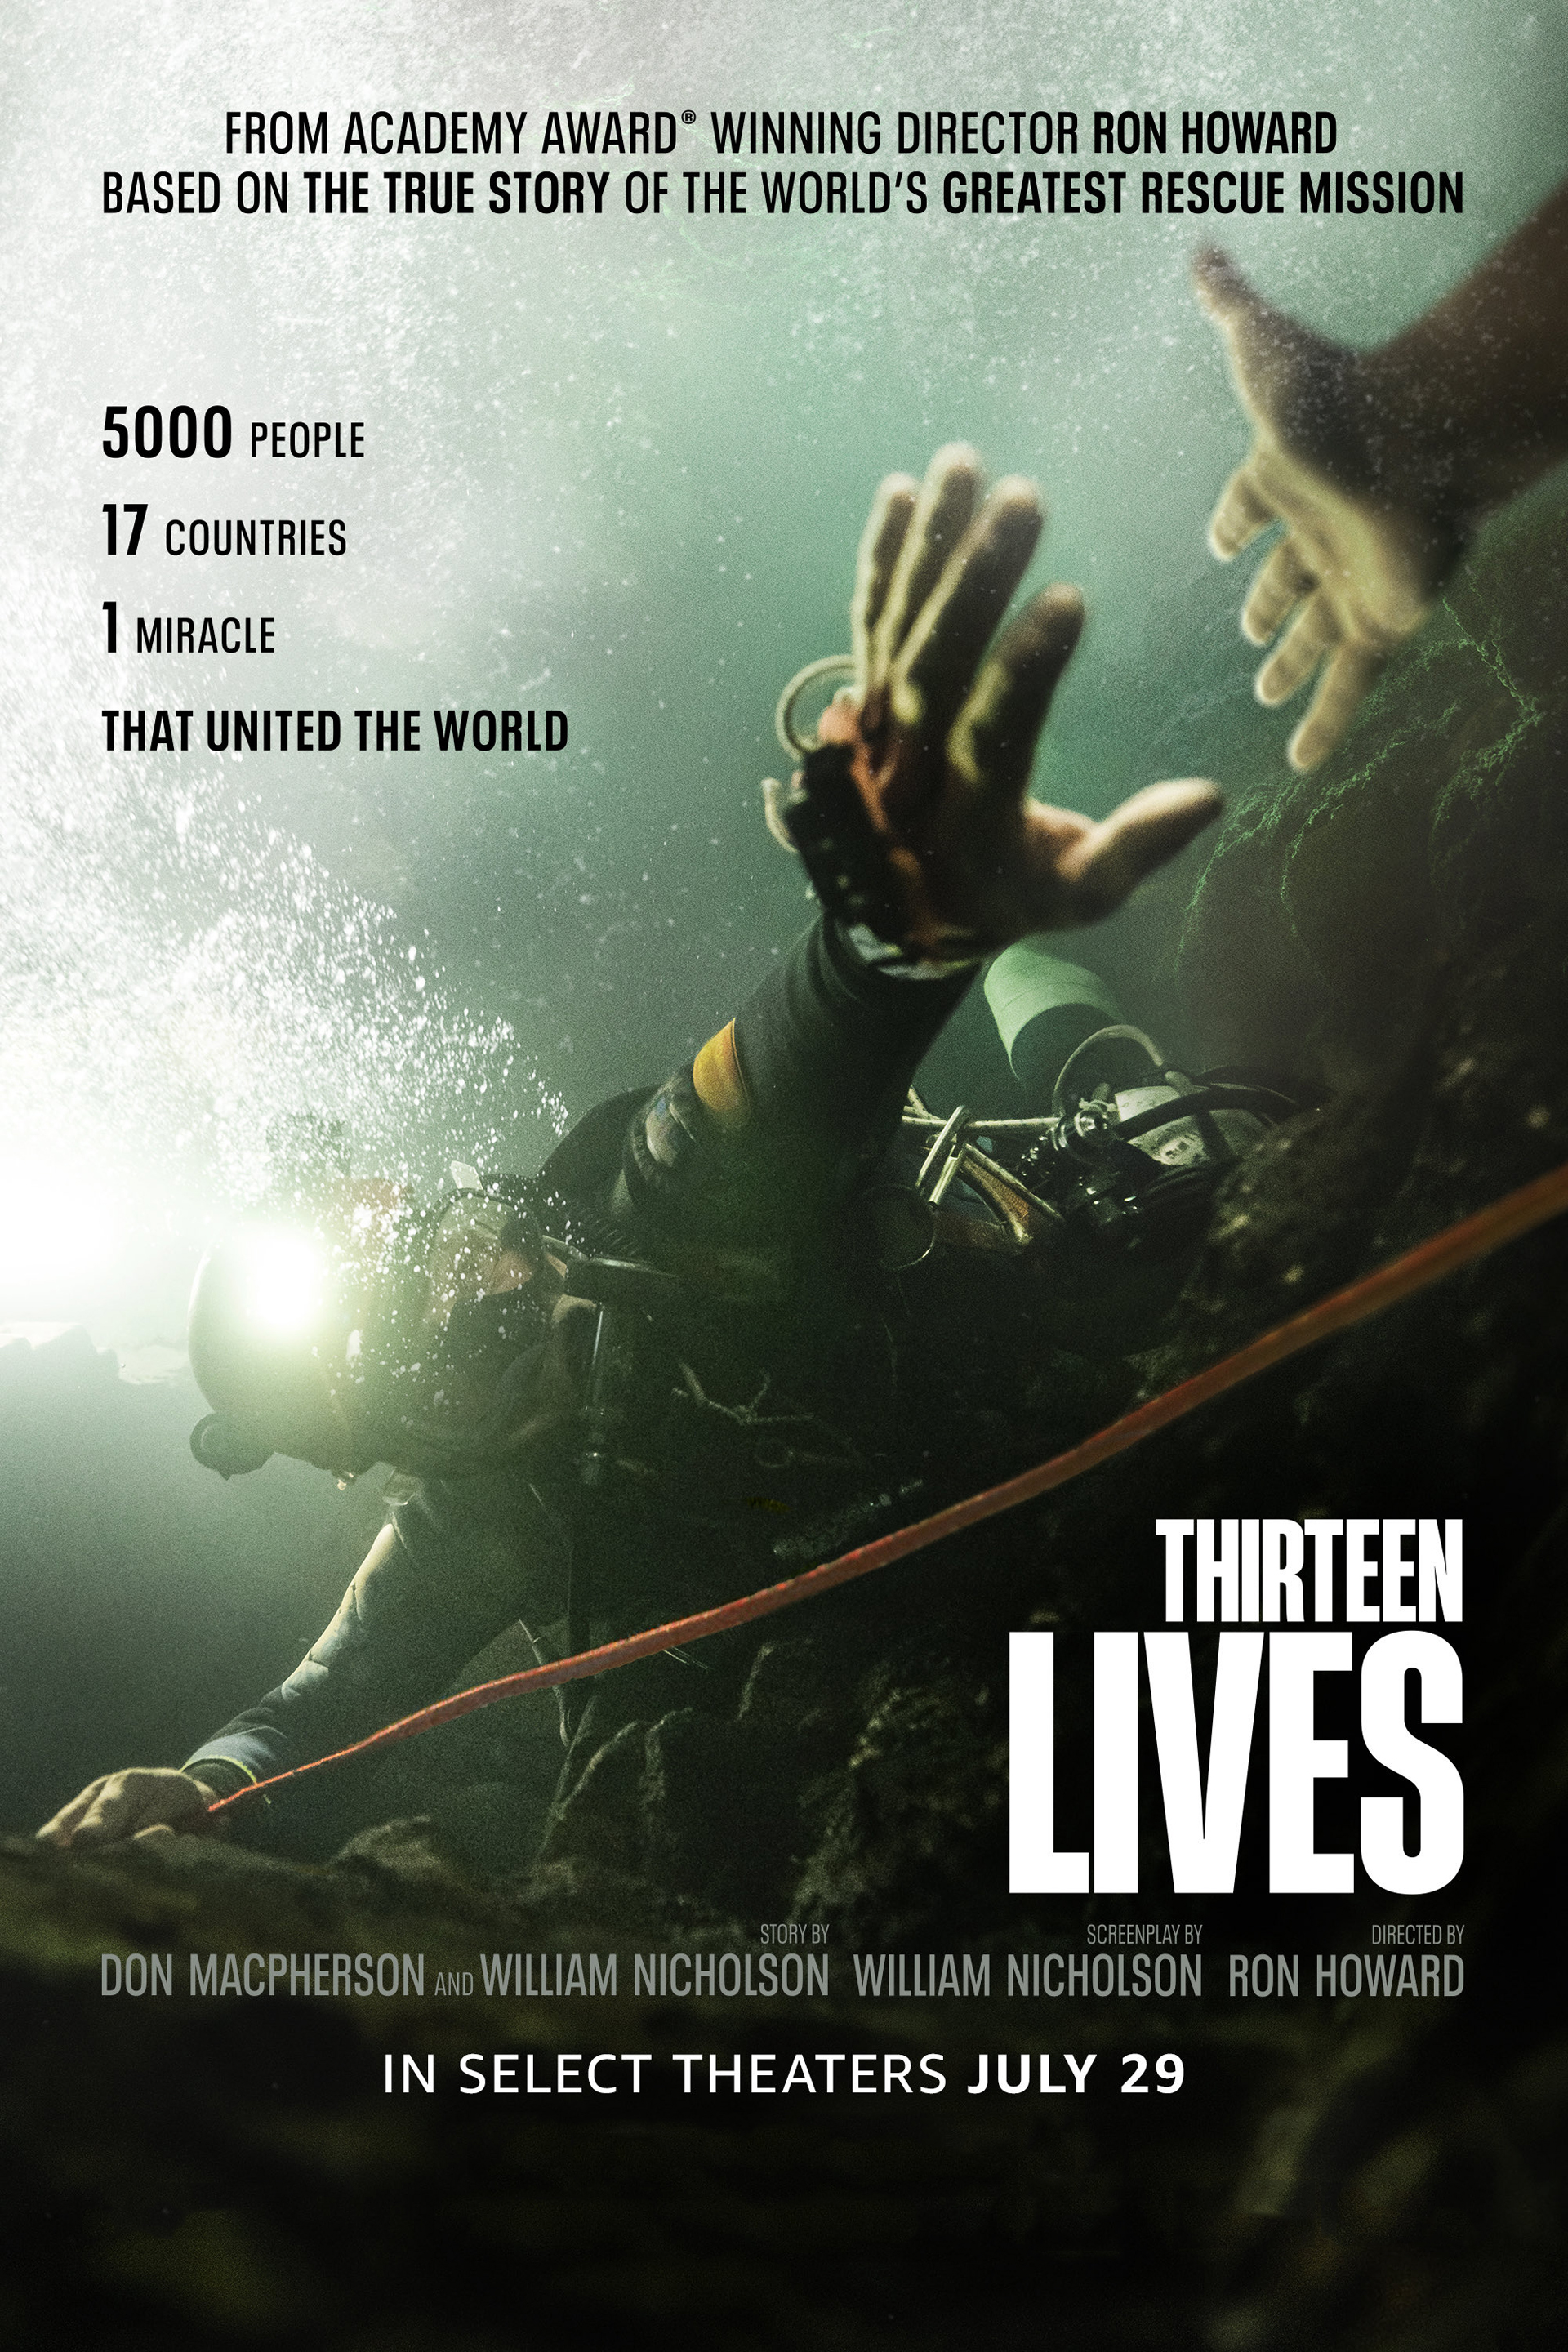 Thirteen Lives Movie Poster Quality Glossy Print Photo Wall Art Viggo Mortensen Colin Farrell Sizes Available 8x10 11x17 16x20 22x28 24x36 27x40 (11x17)